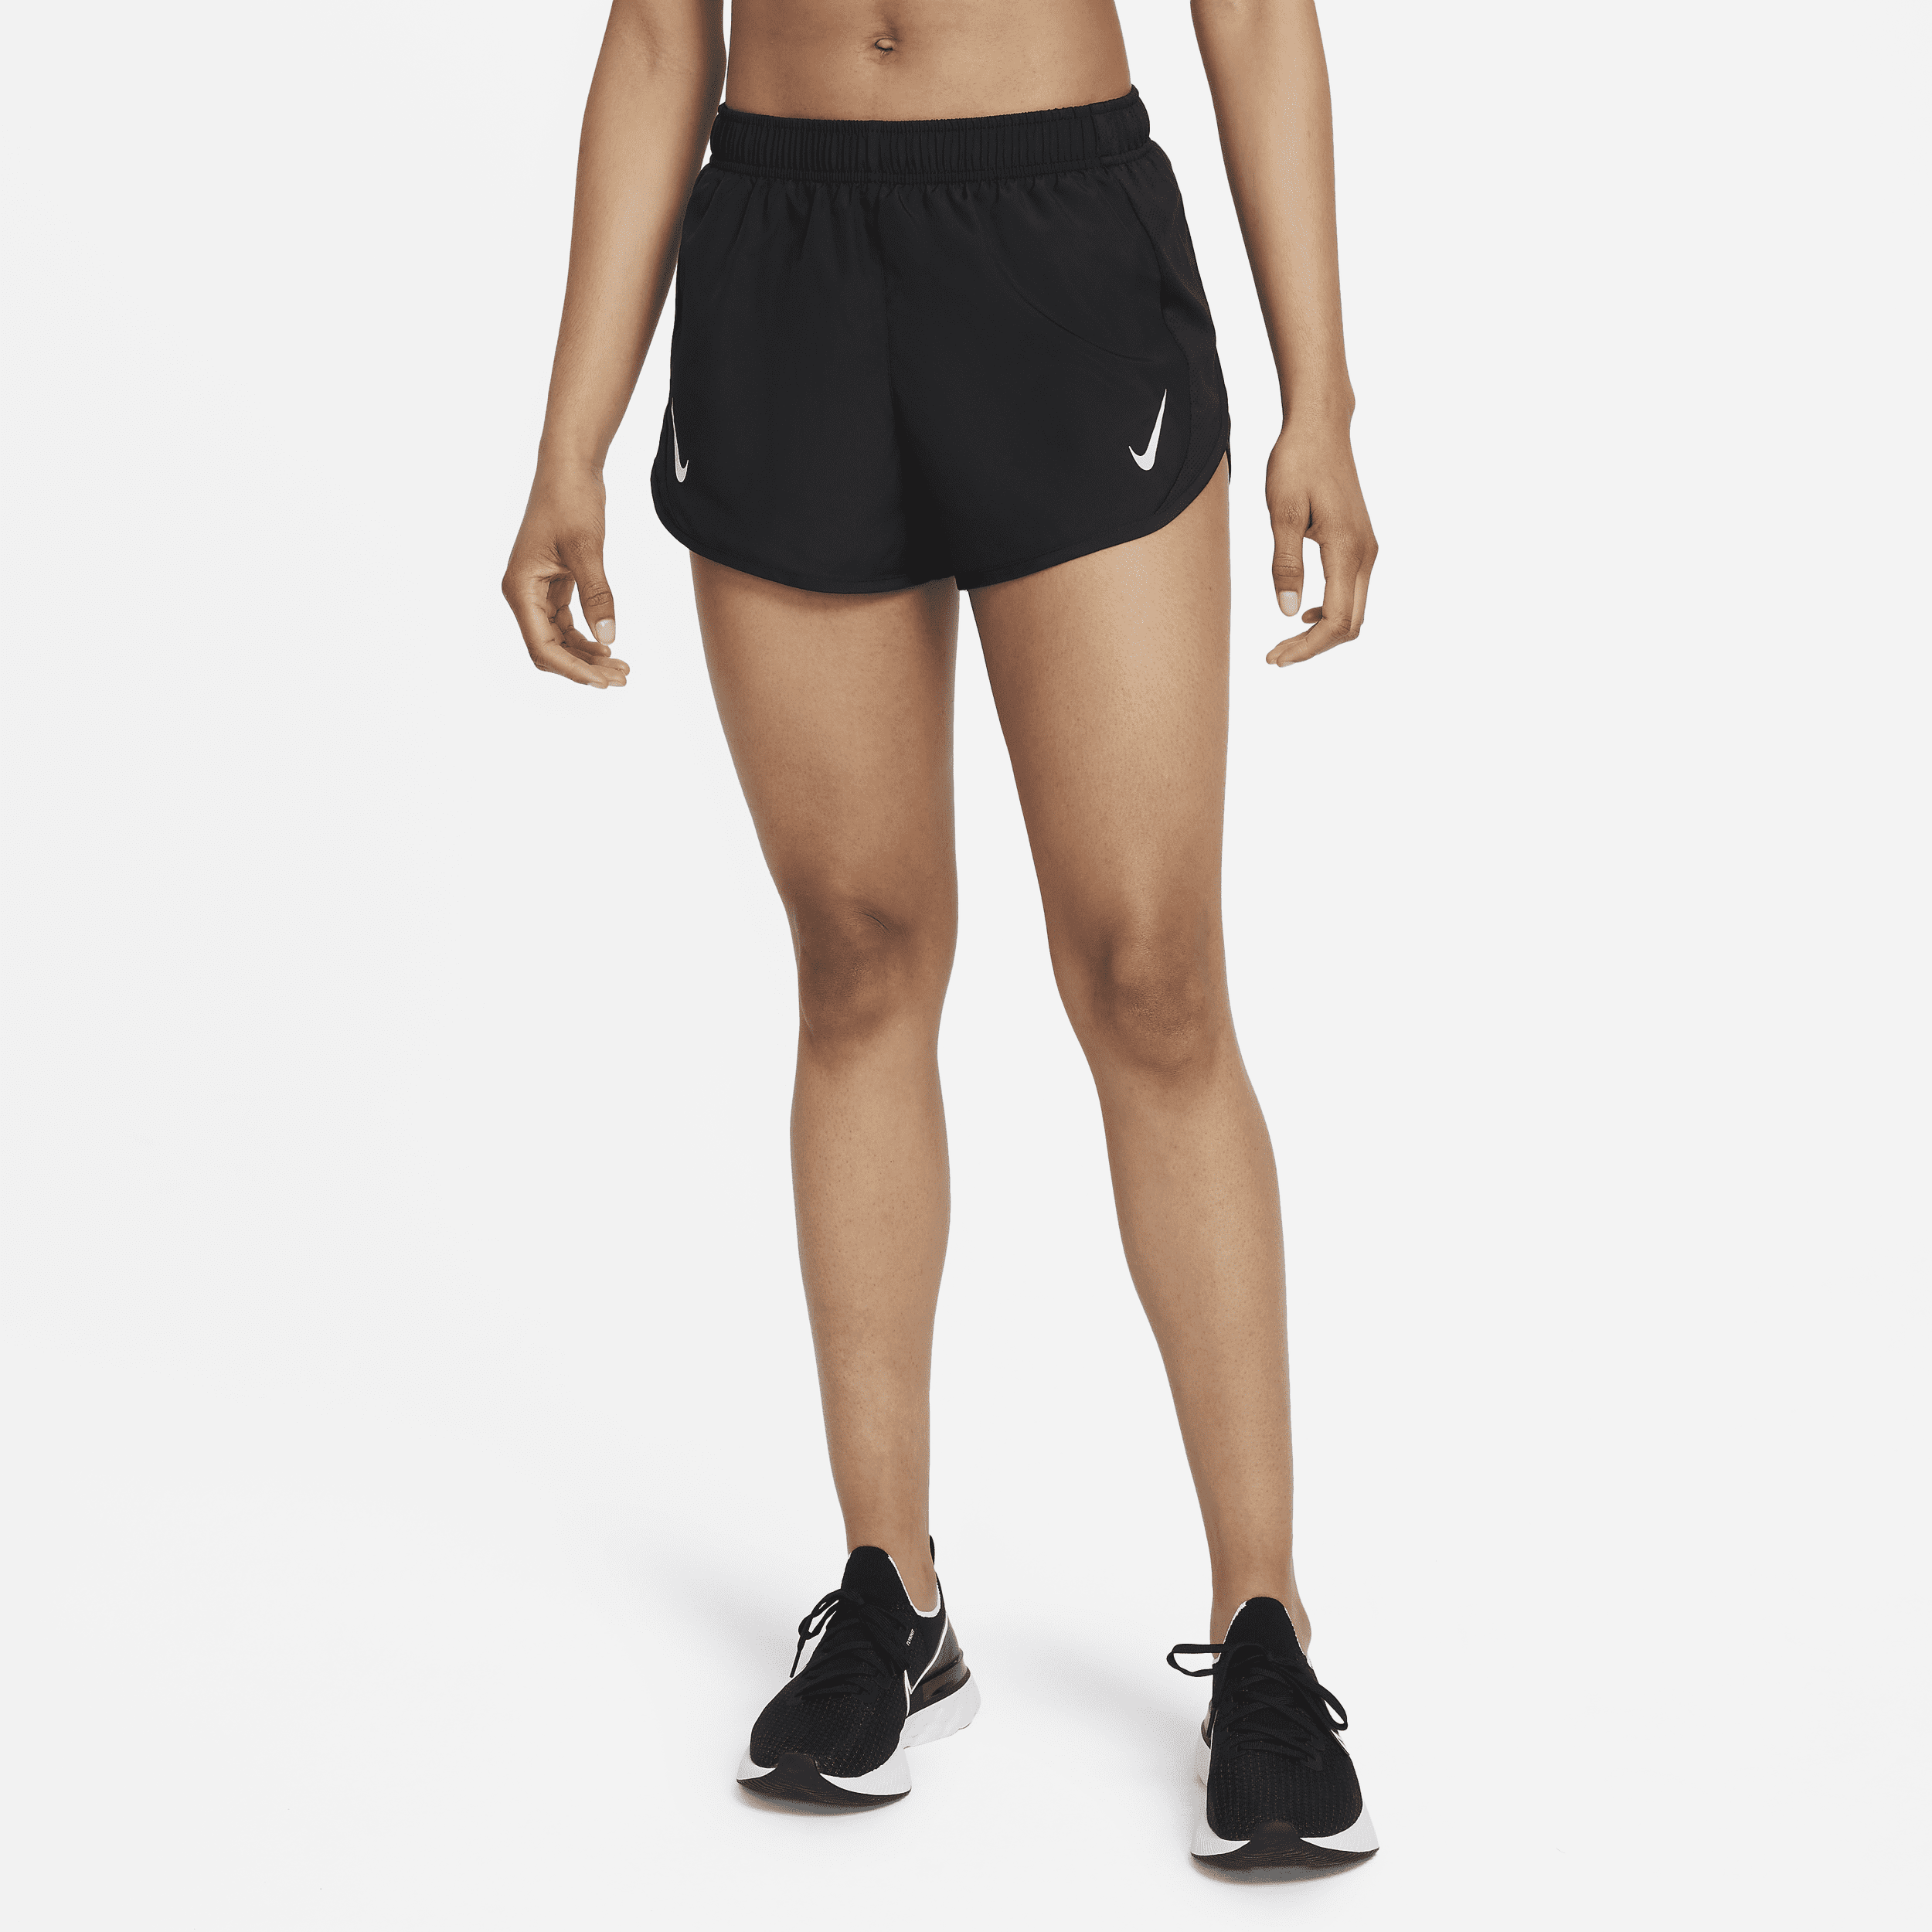 Nike Fast Tempo Dri-FIT hardloopshorts voor dames - Zwart